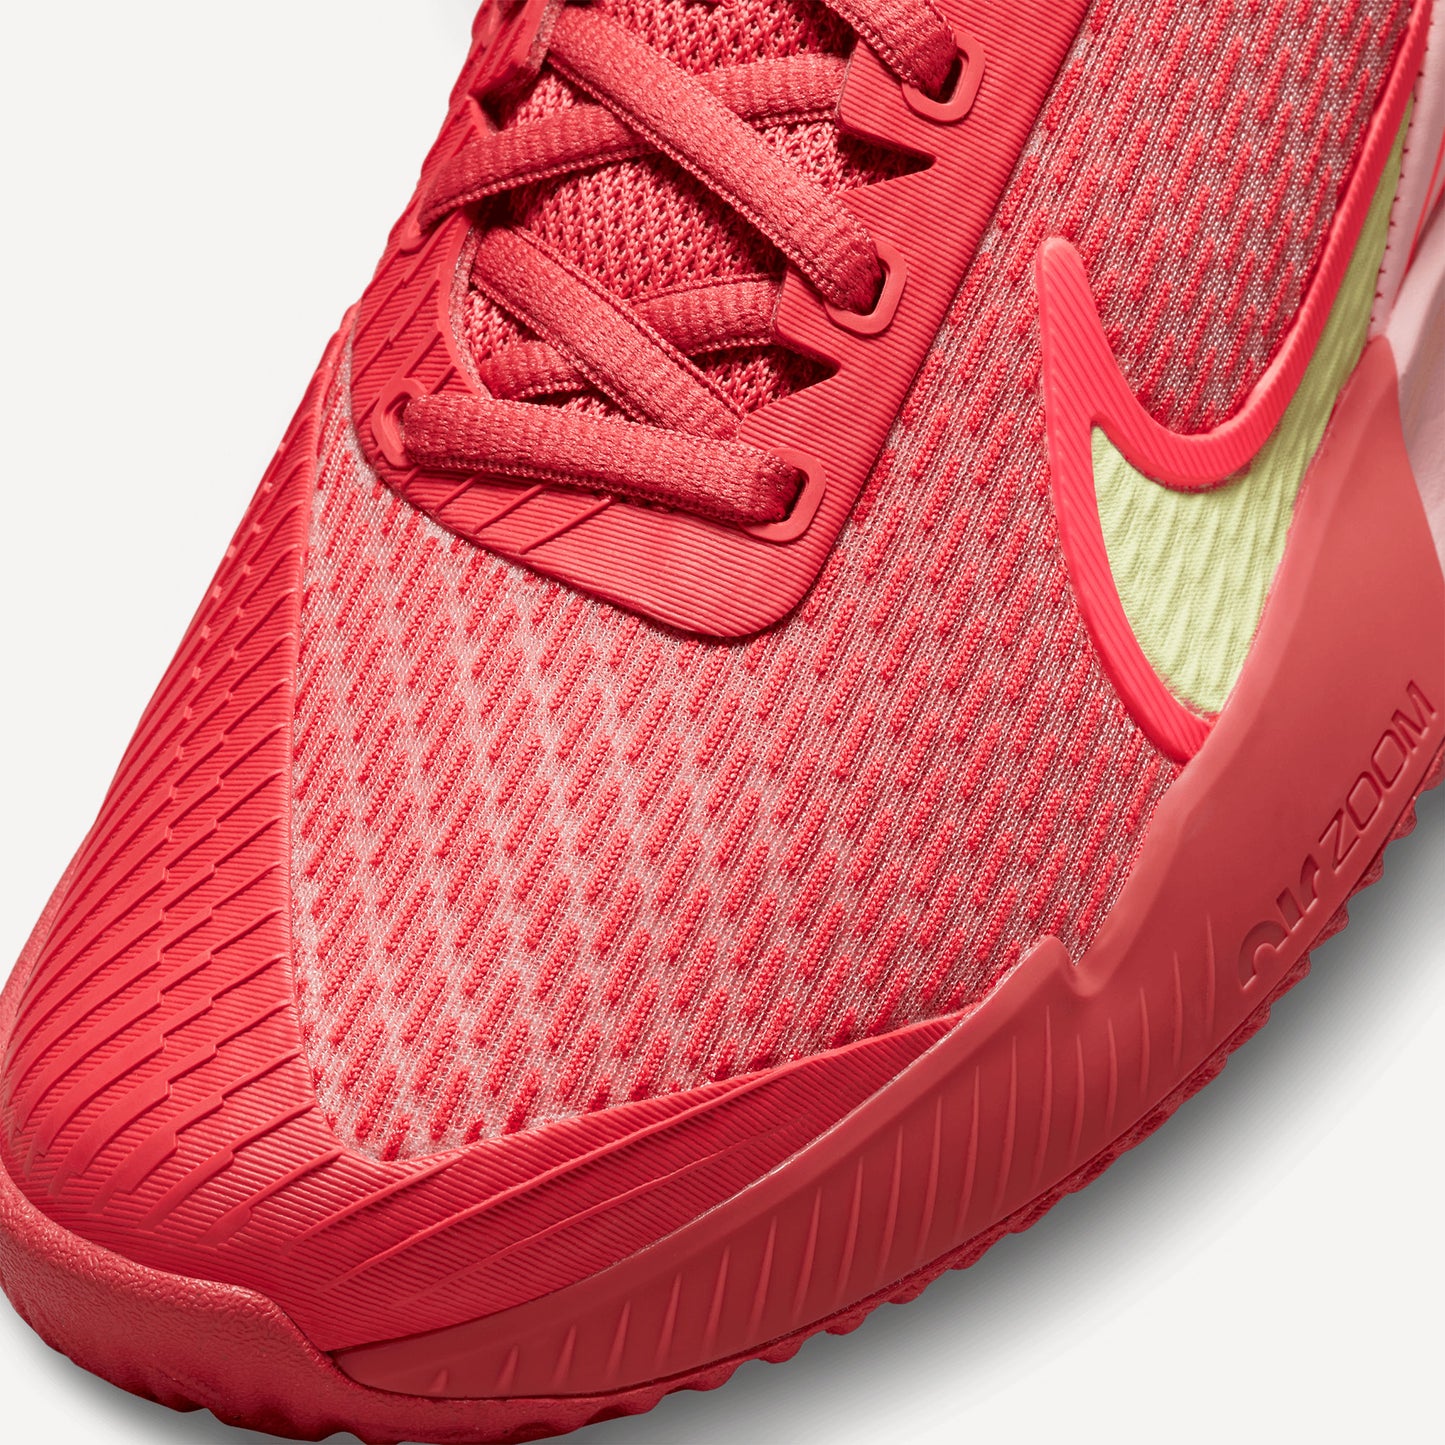 NikeCourt Air Zoom Vapor Pro 2 Women's Clay Court Tennis Shoes Red (7)